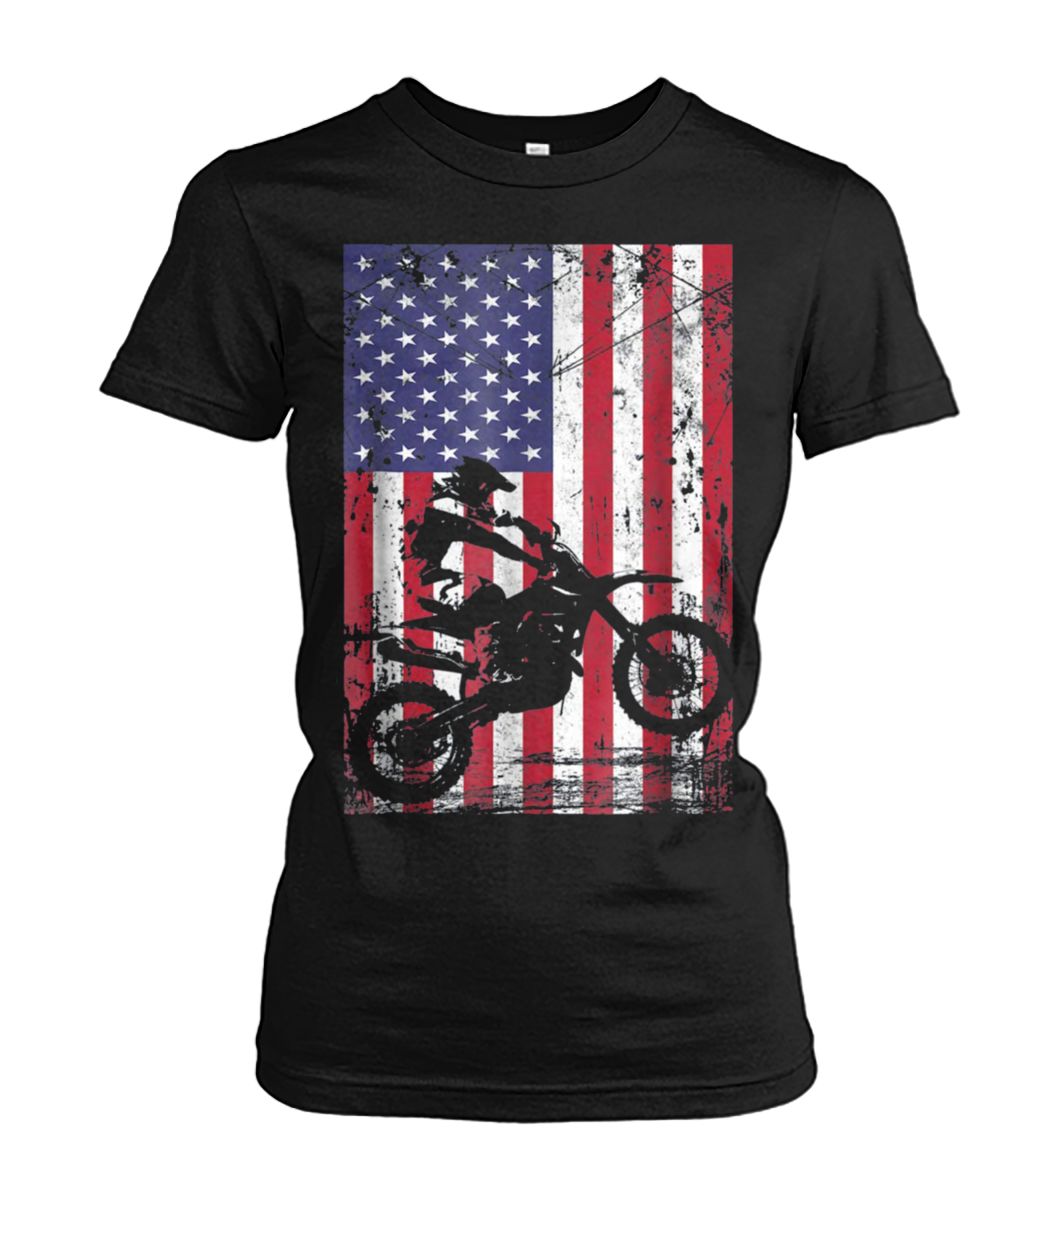 Dirt bike american flag 4th of july women's crew tee